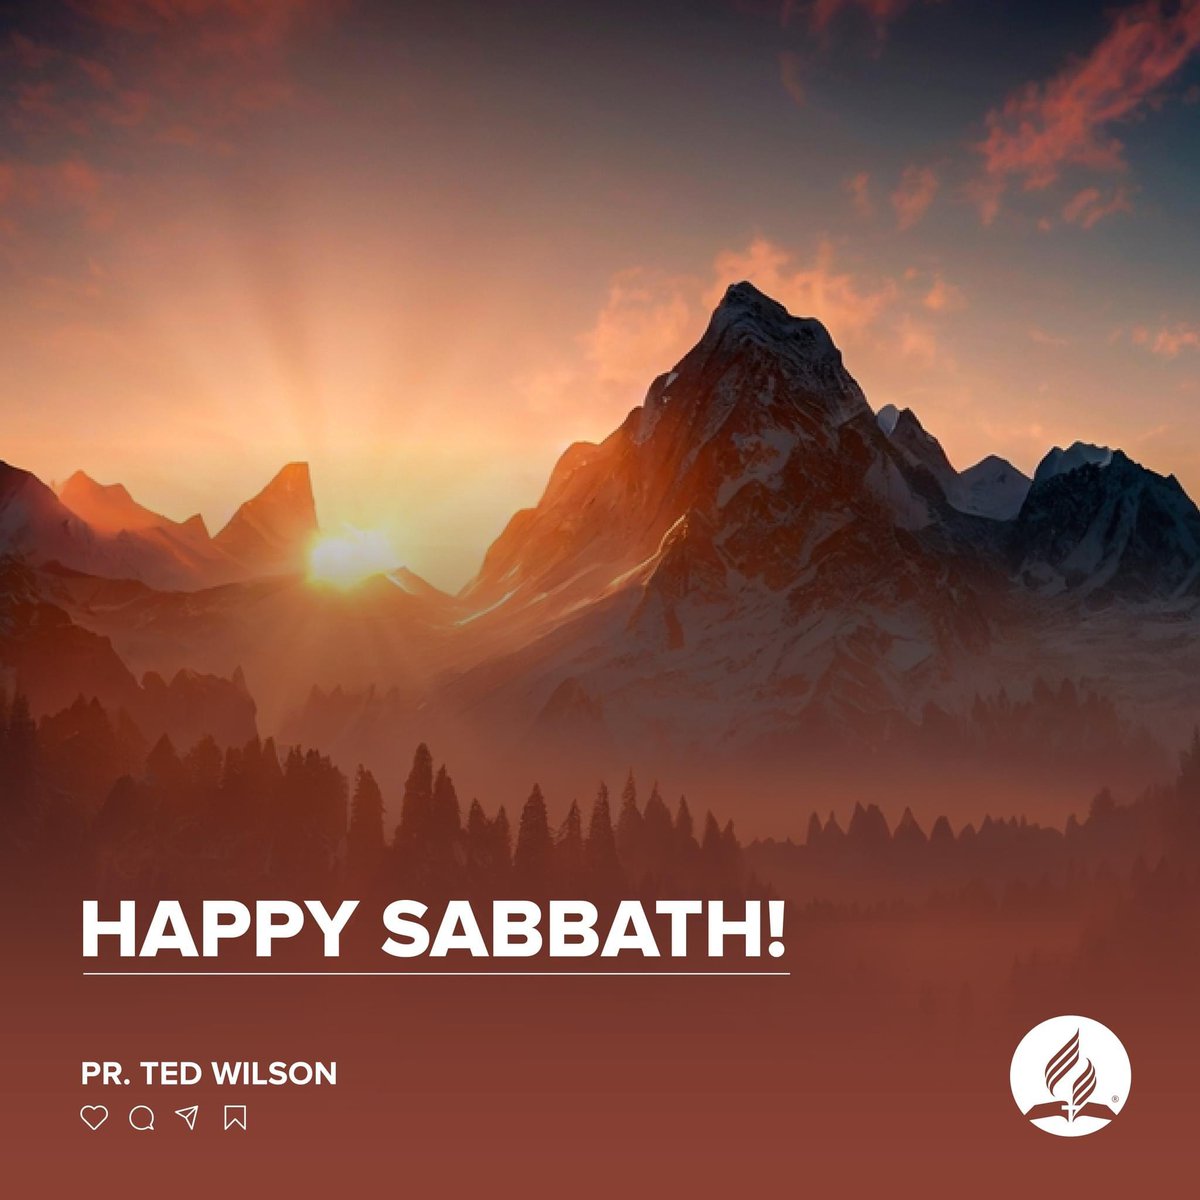 Happy Sabbath! #Sabbath #HappySabbath